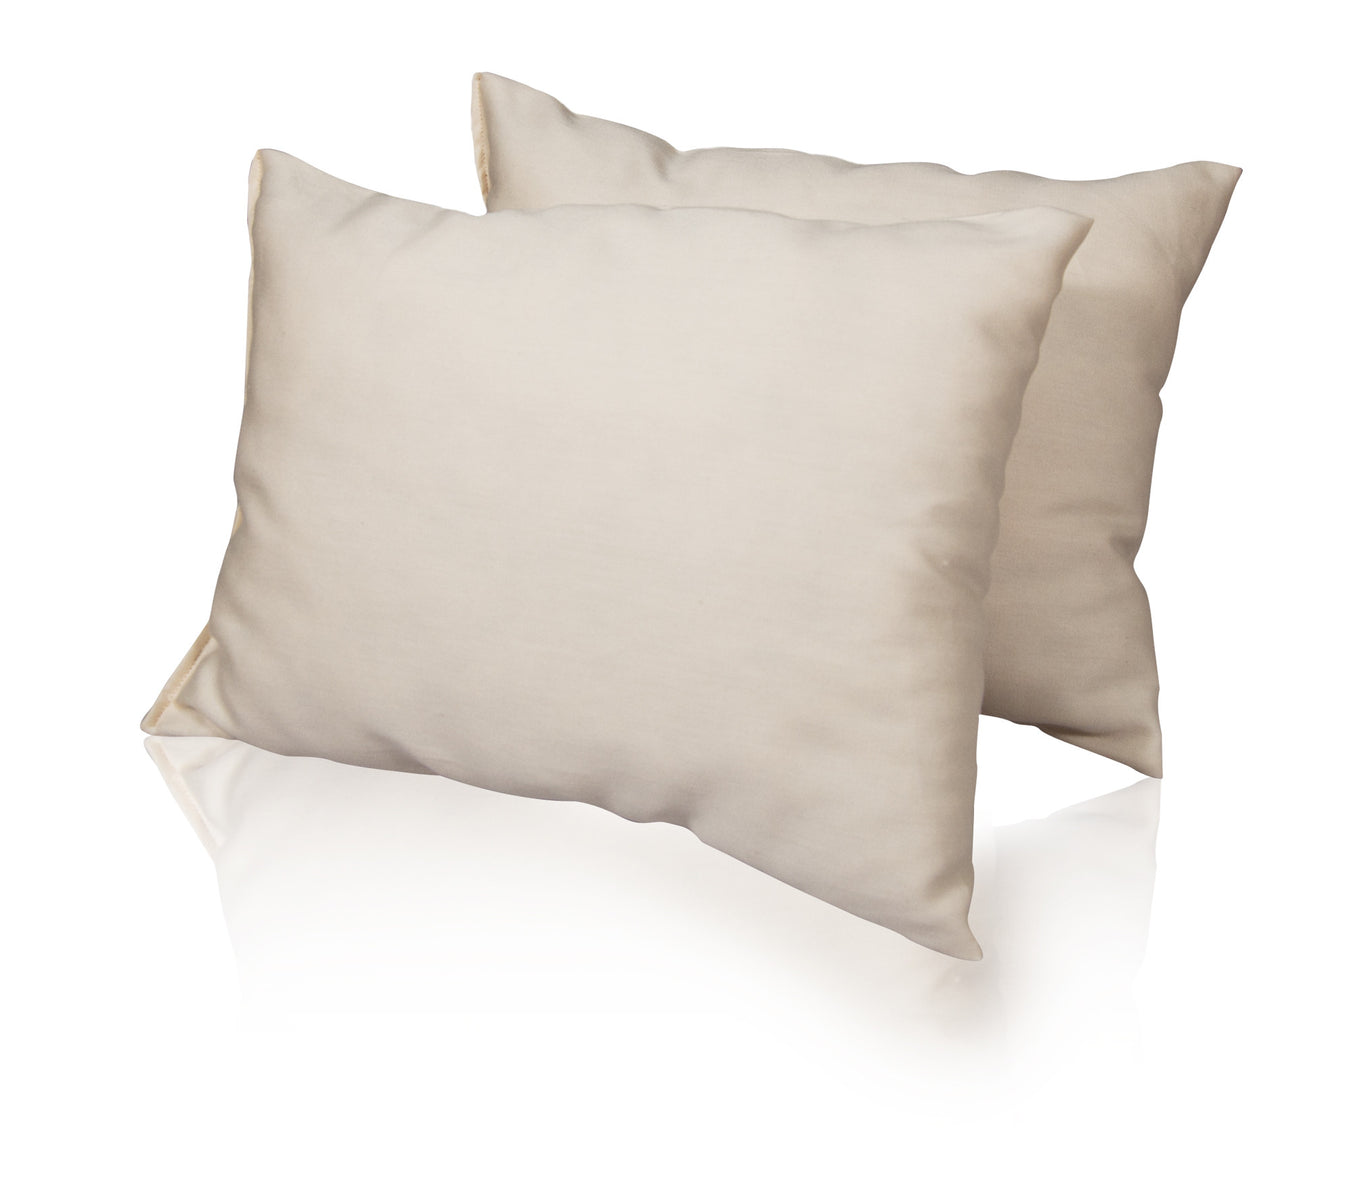 Plain White Cushion Cover 100% Cotton Square Decorative Throw Pillow  Meditation Pillow Covers Sofa Couch Cushion Pillowcases 